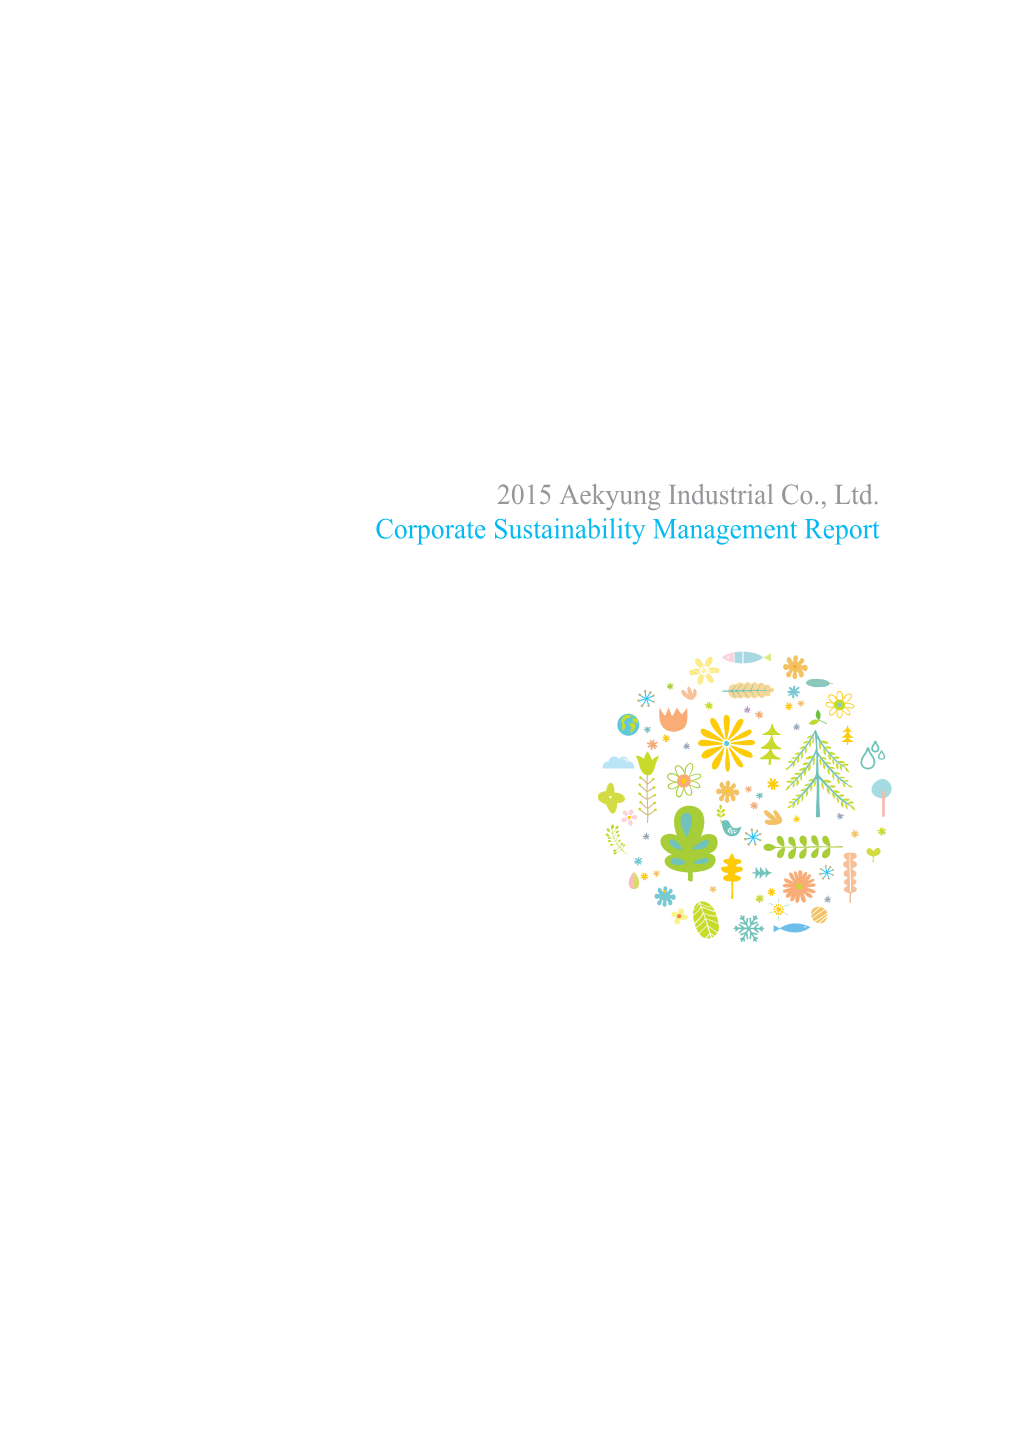 2015 Aekyung Industrial Co., Ltd. Corporate Sustainability Management Report 2015 Aekyung Industrial Co., Ltd